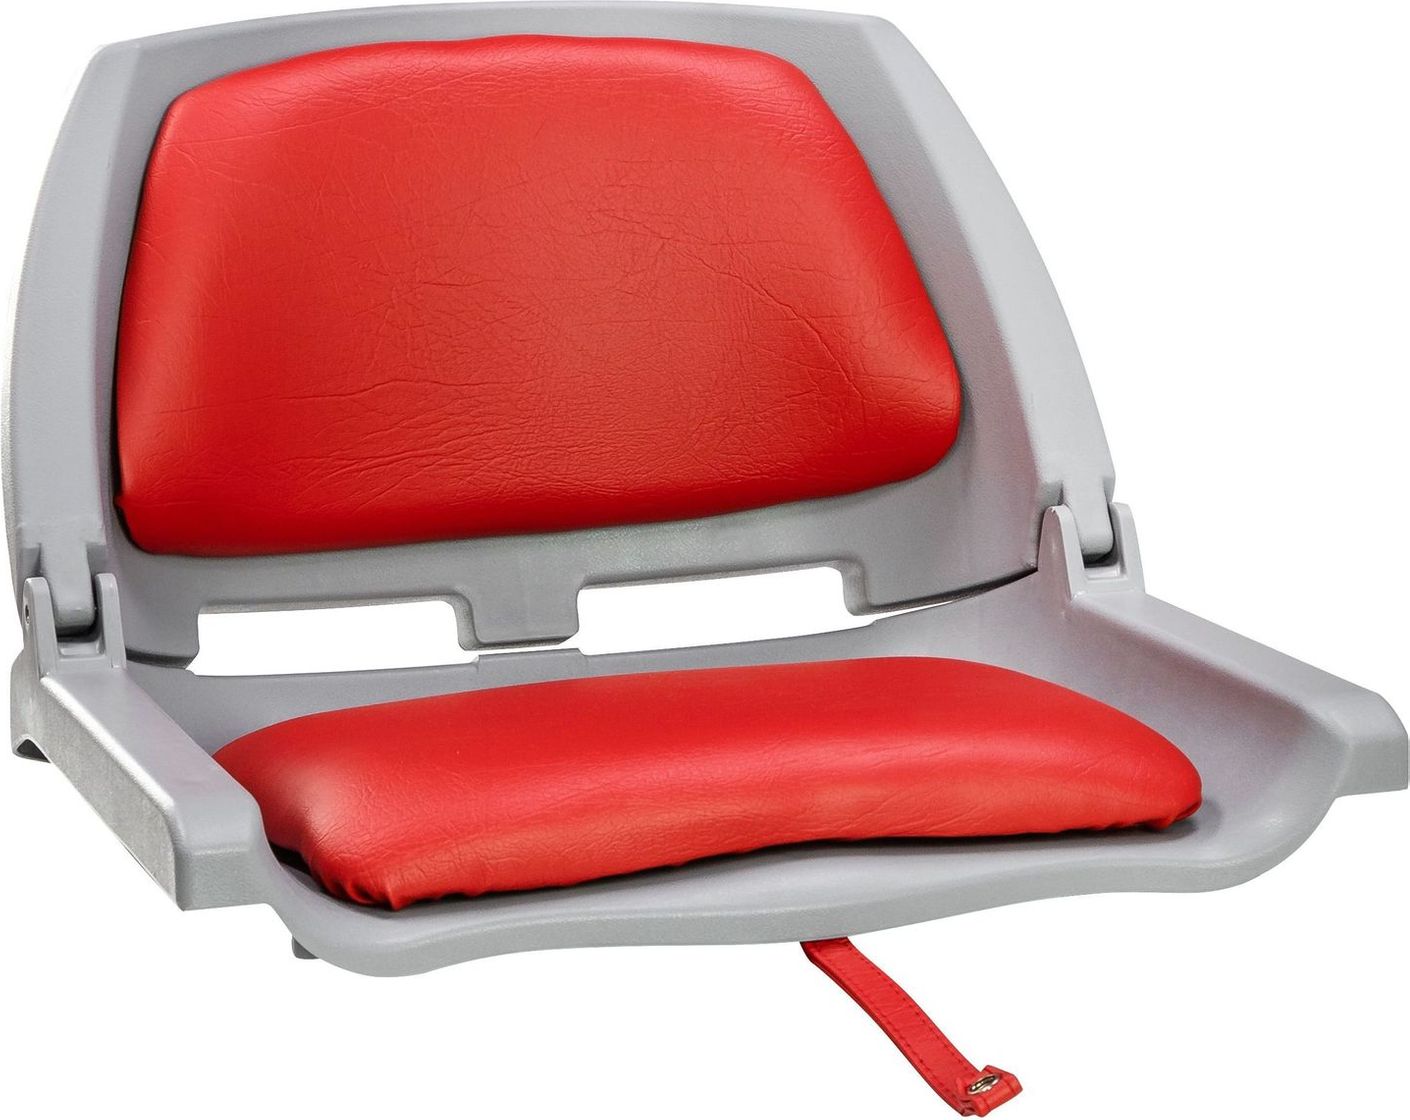 Кресло складное мягкое TRAVELER, цвет серый/красный (упаковка из 2 шт.) 1061114C_pkg_2 кресло складное мягкое traveler обивка камуфляжная ткань duck blind упаковка из 2 шт 1061108c pkg 2